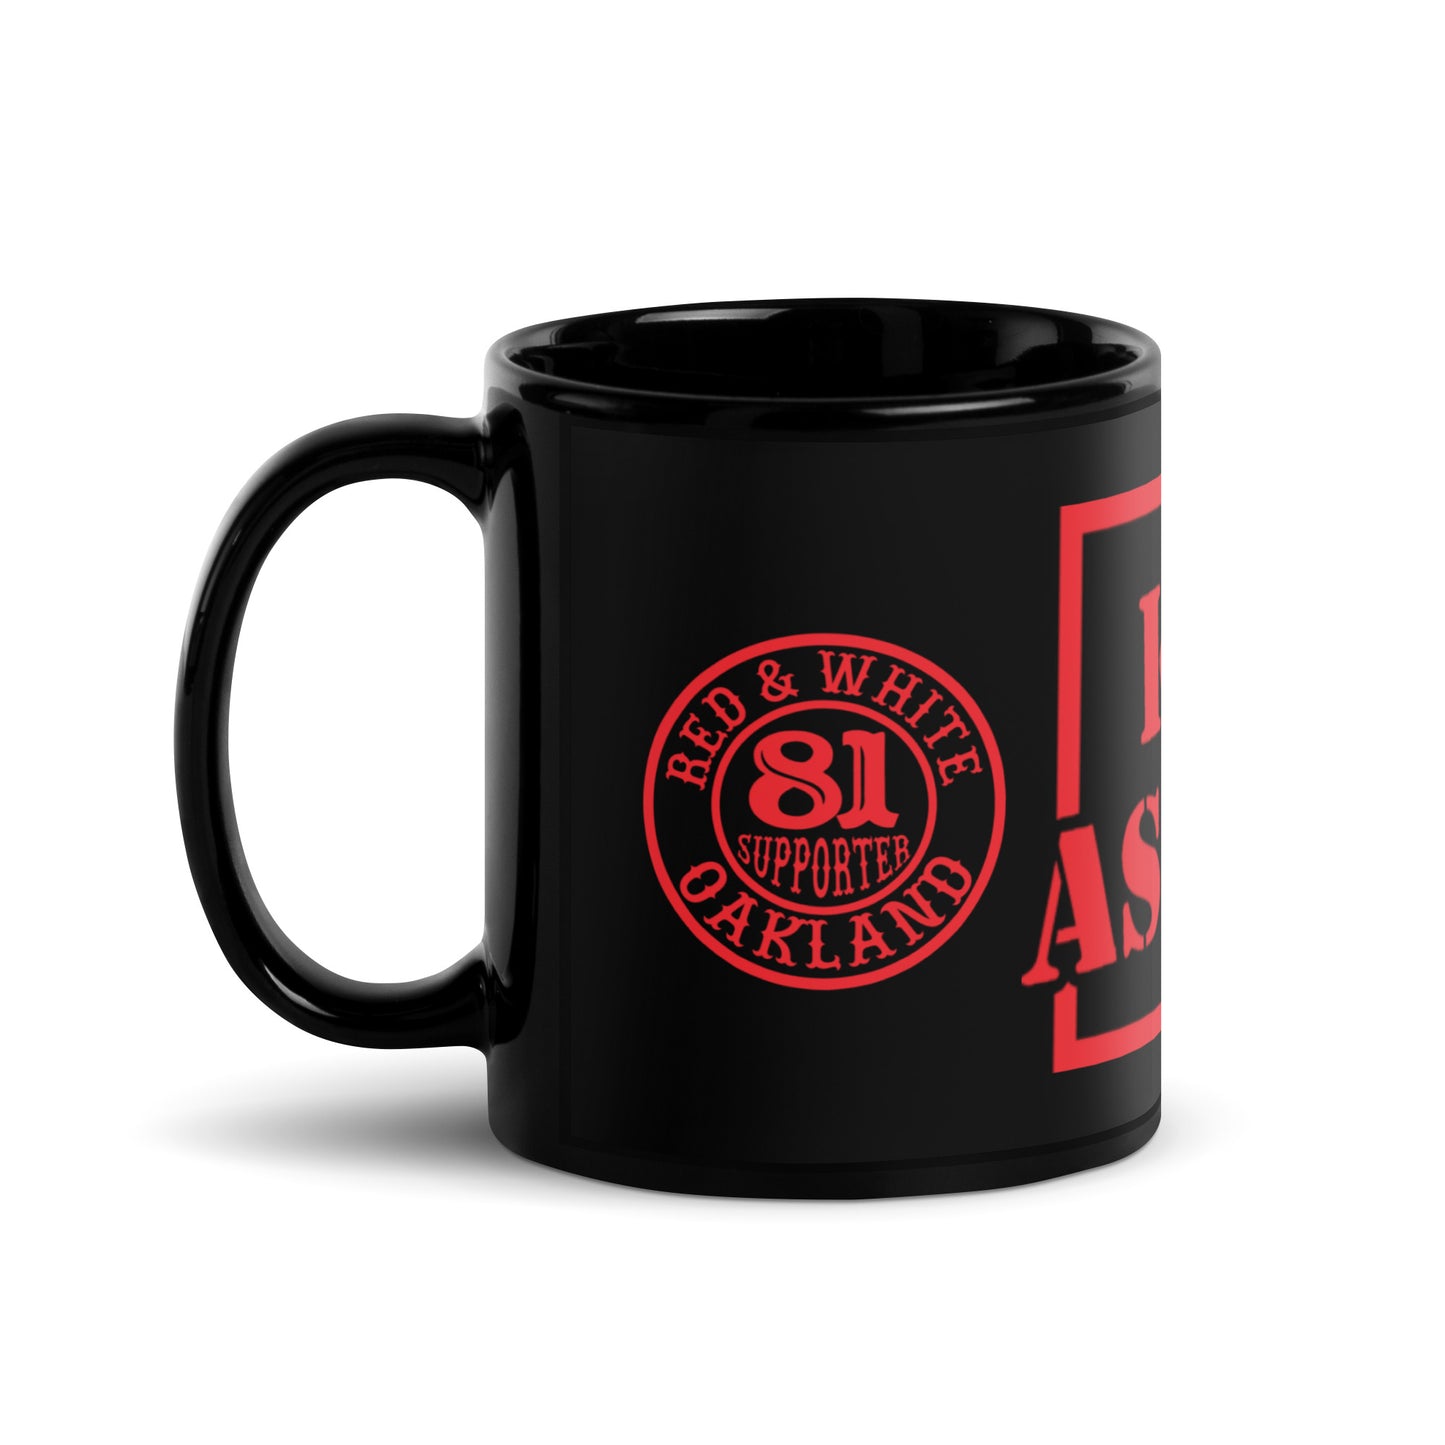 Support 81 Oakland -Black Glossy Mug